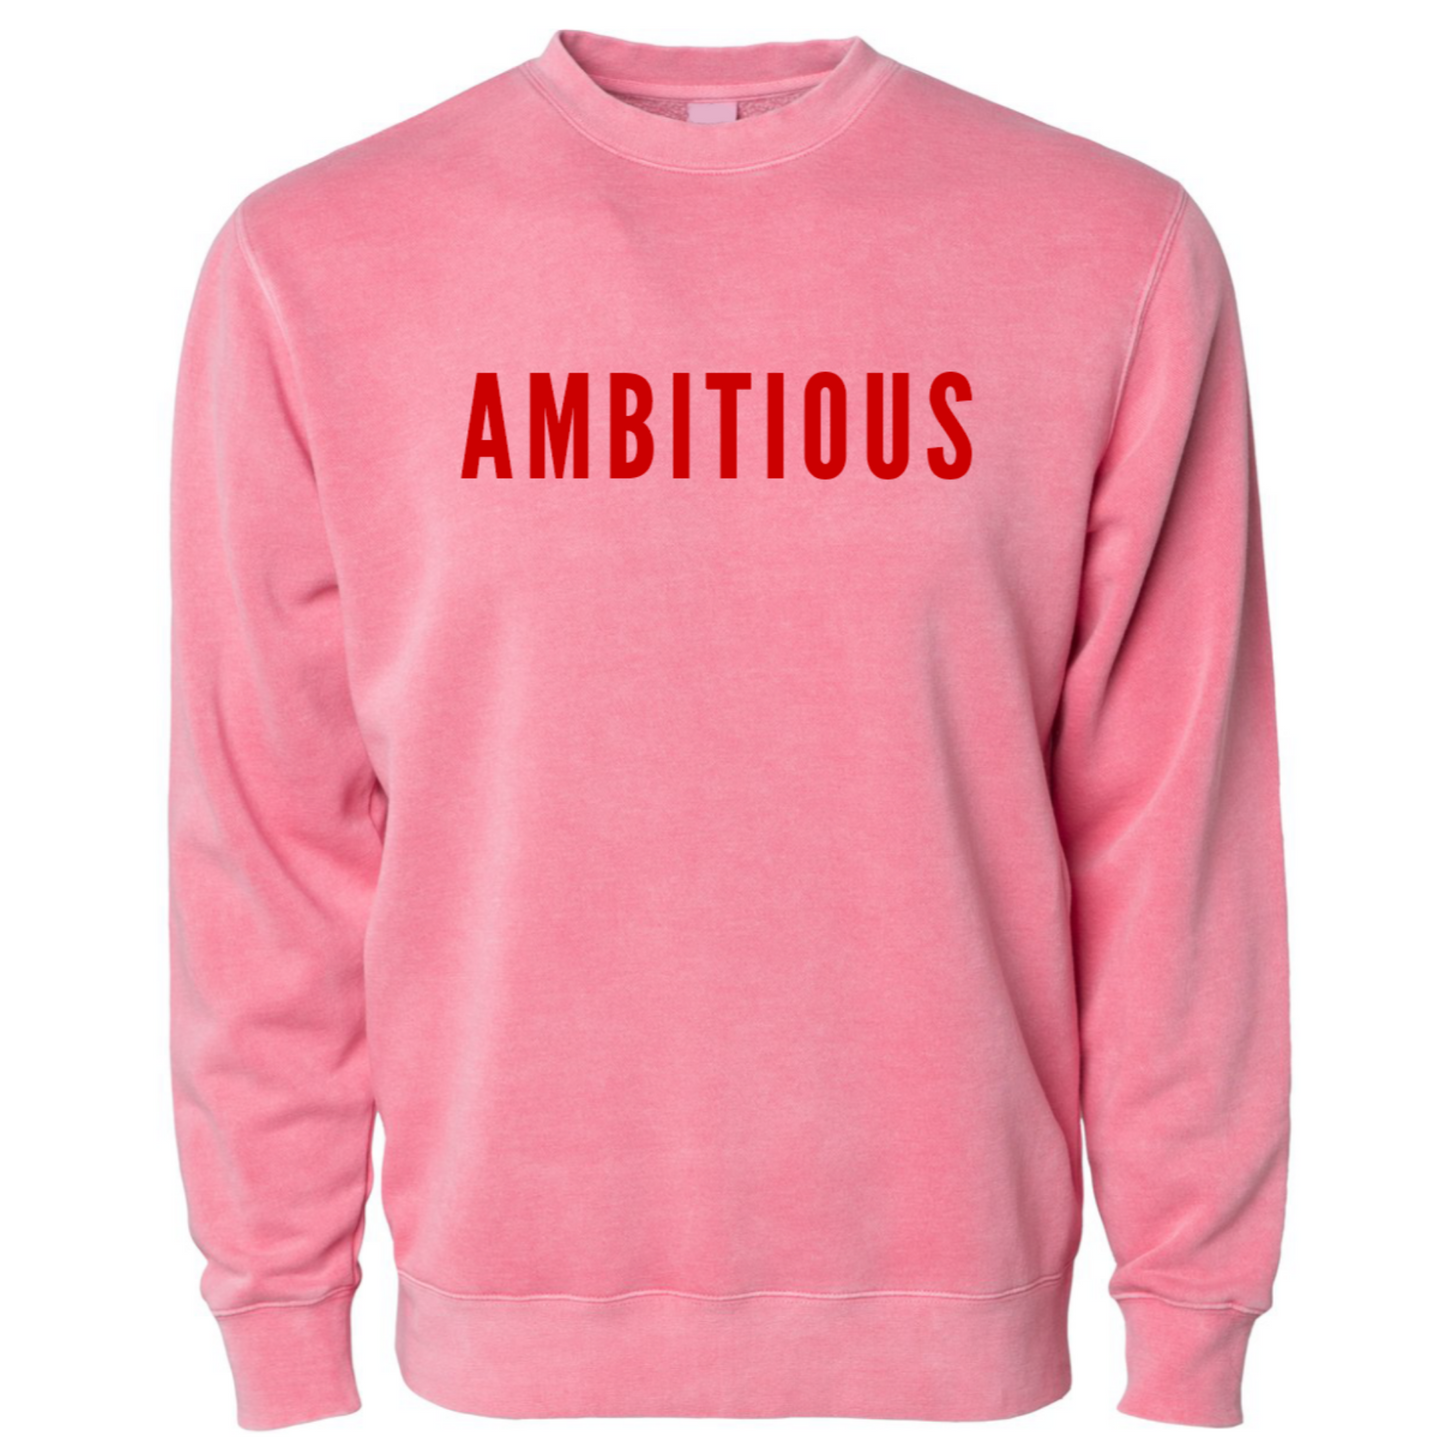 Ambitious Soft Garment Dye Crewneck Sweatshirt (Pink)